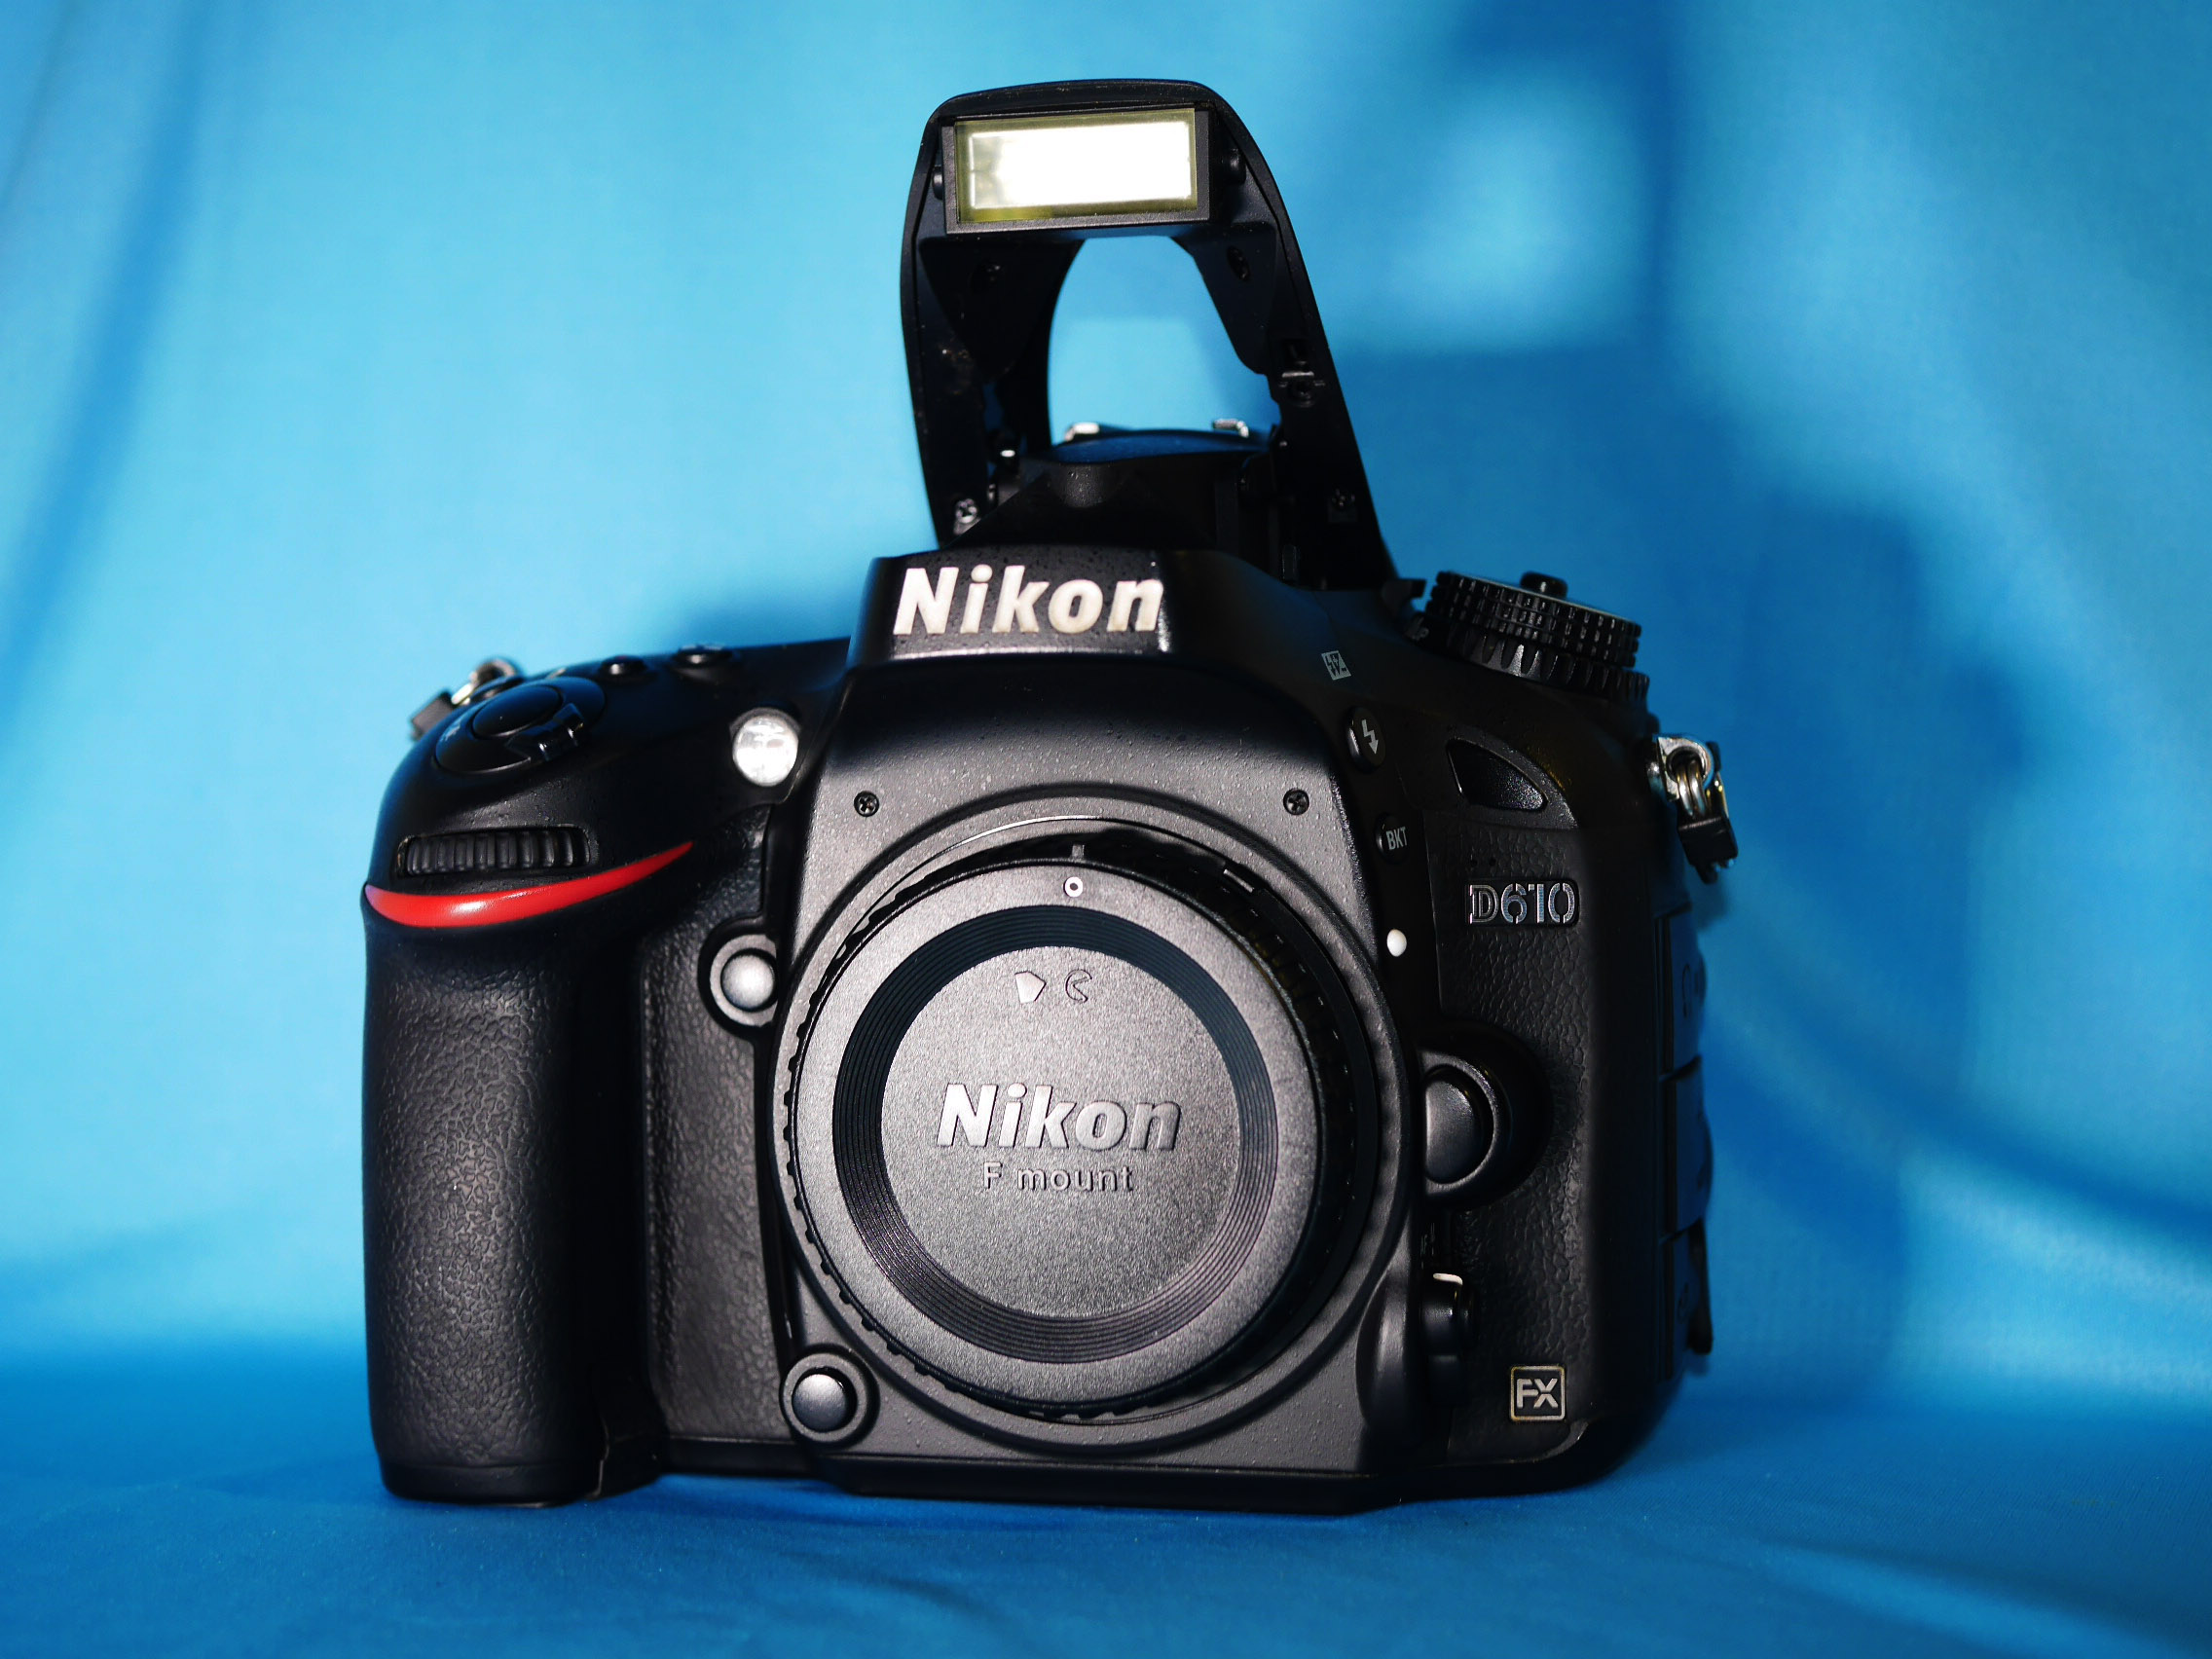 Nikon D610 Full-Frame DSLR with Low-Light Performance Dual card slots, 24.3MP Digital SLR Camera - ตัวกล้อง Black Body, Full Frame CMOS FX-Format